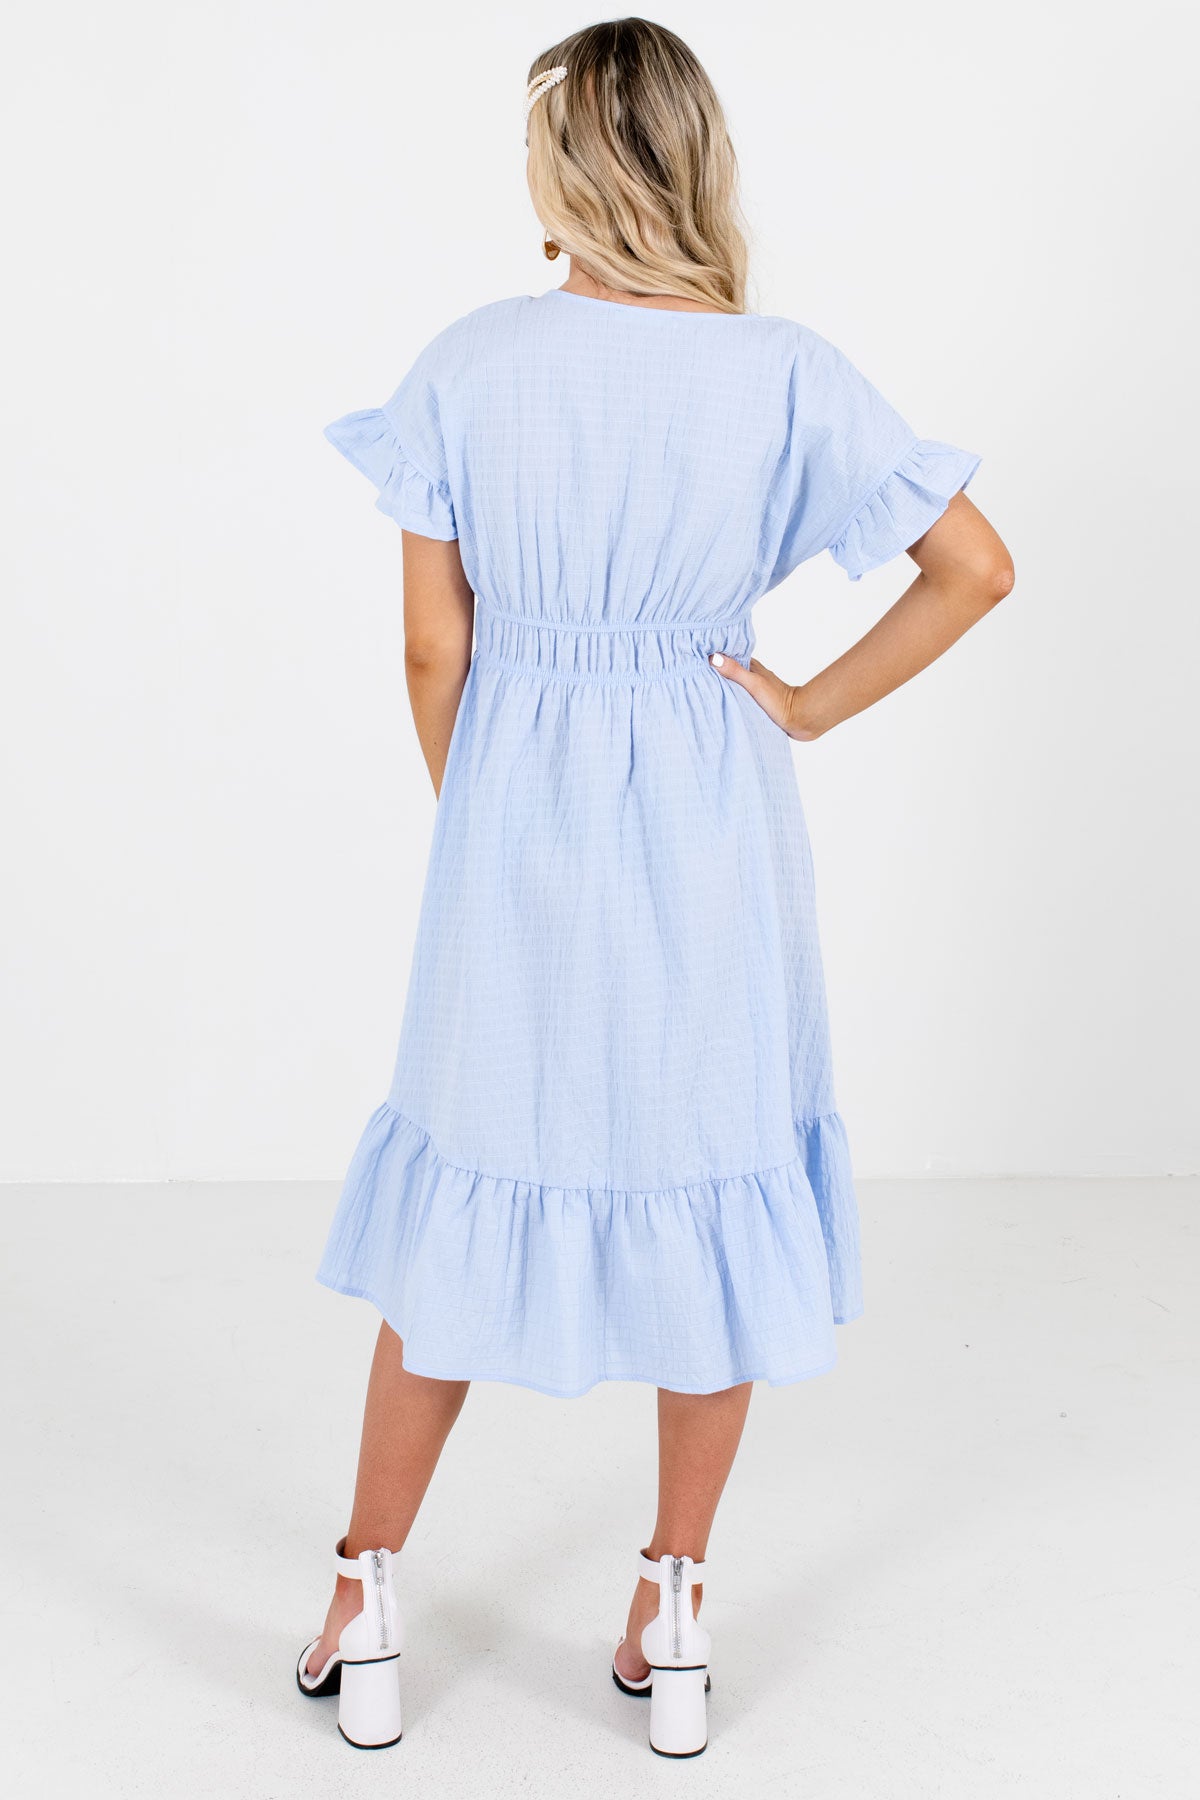 Women's Light Blue Ruffle Accented Boutique Knee-Length Dress